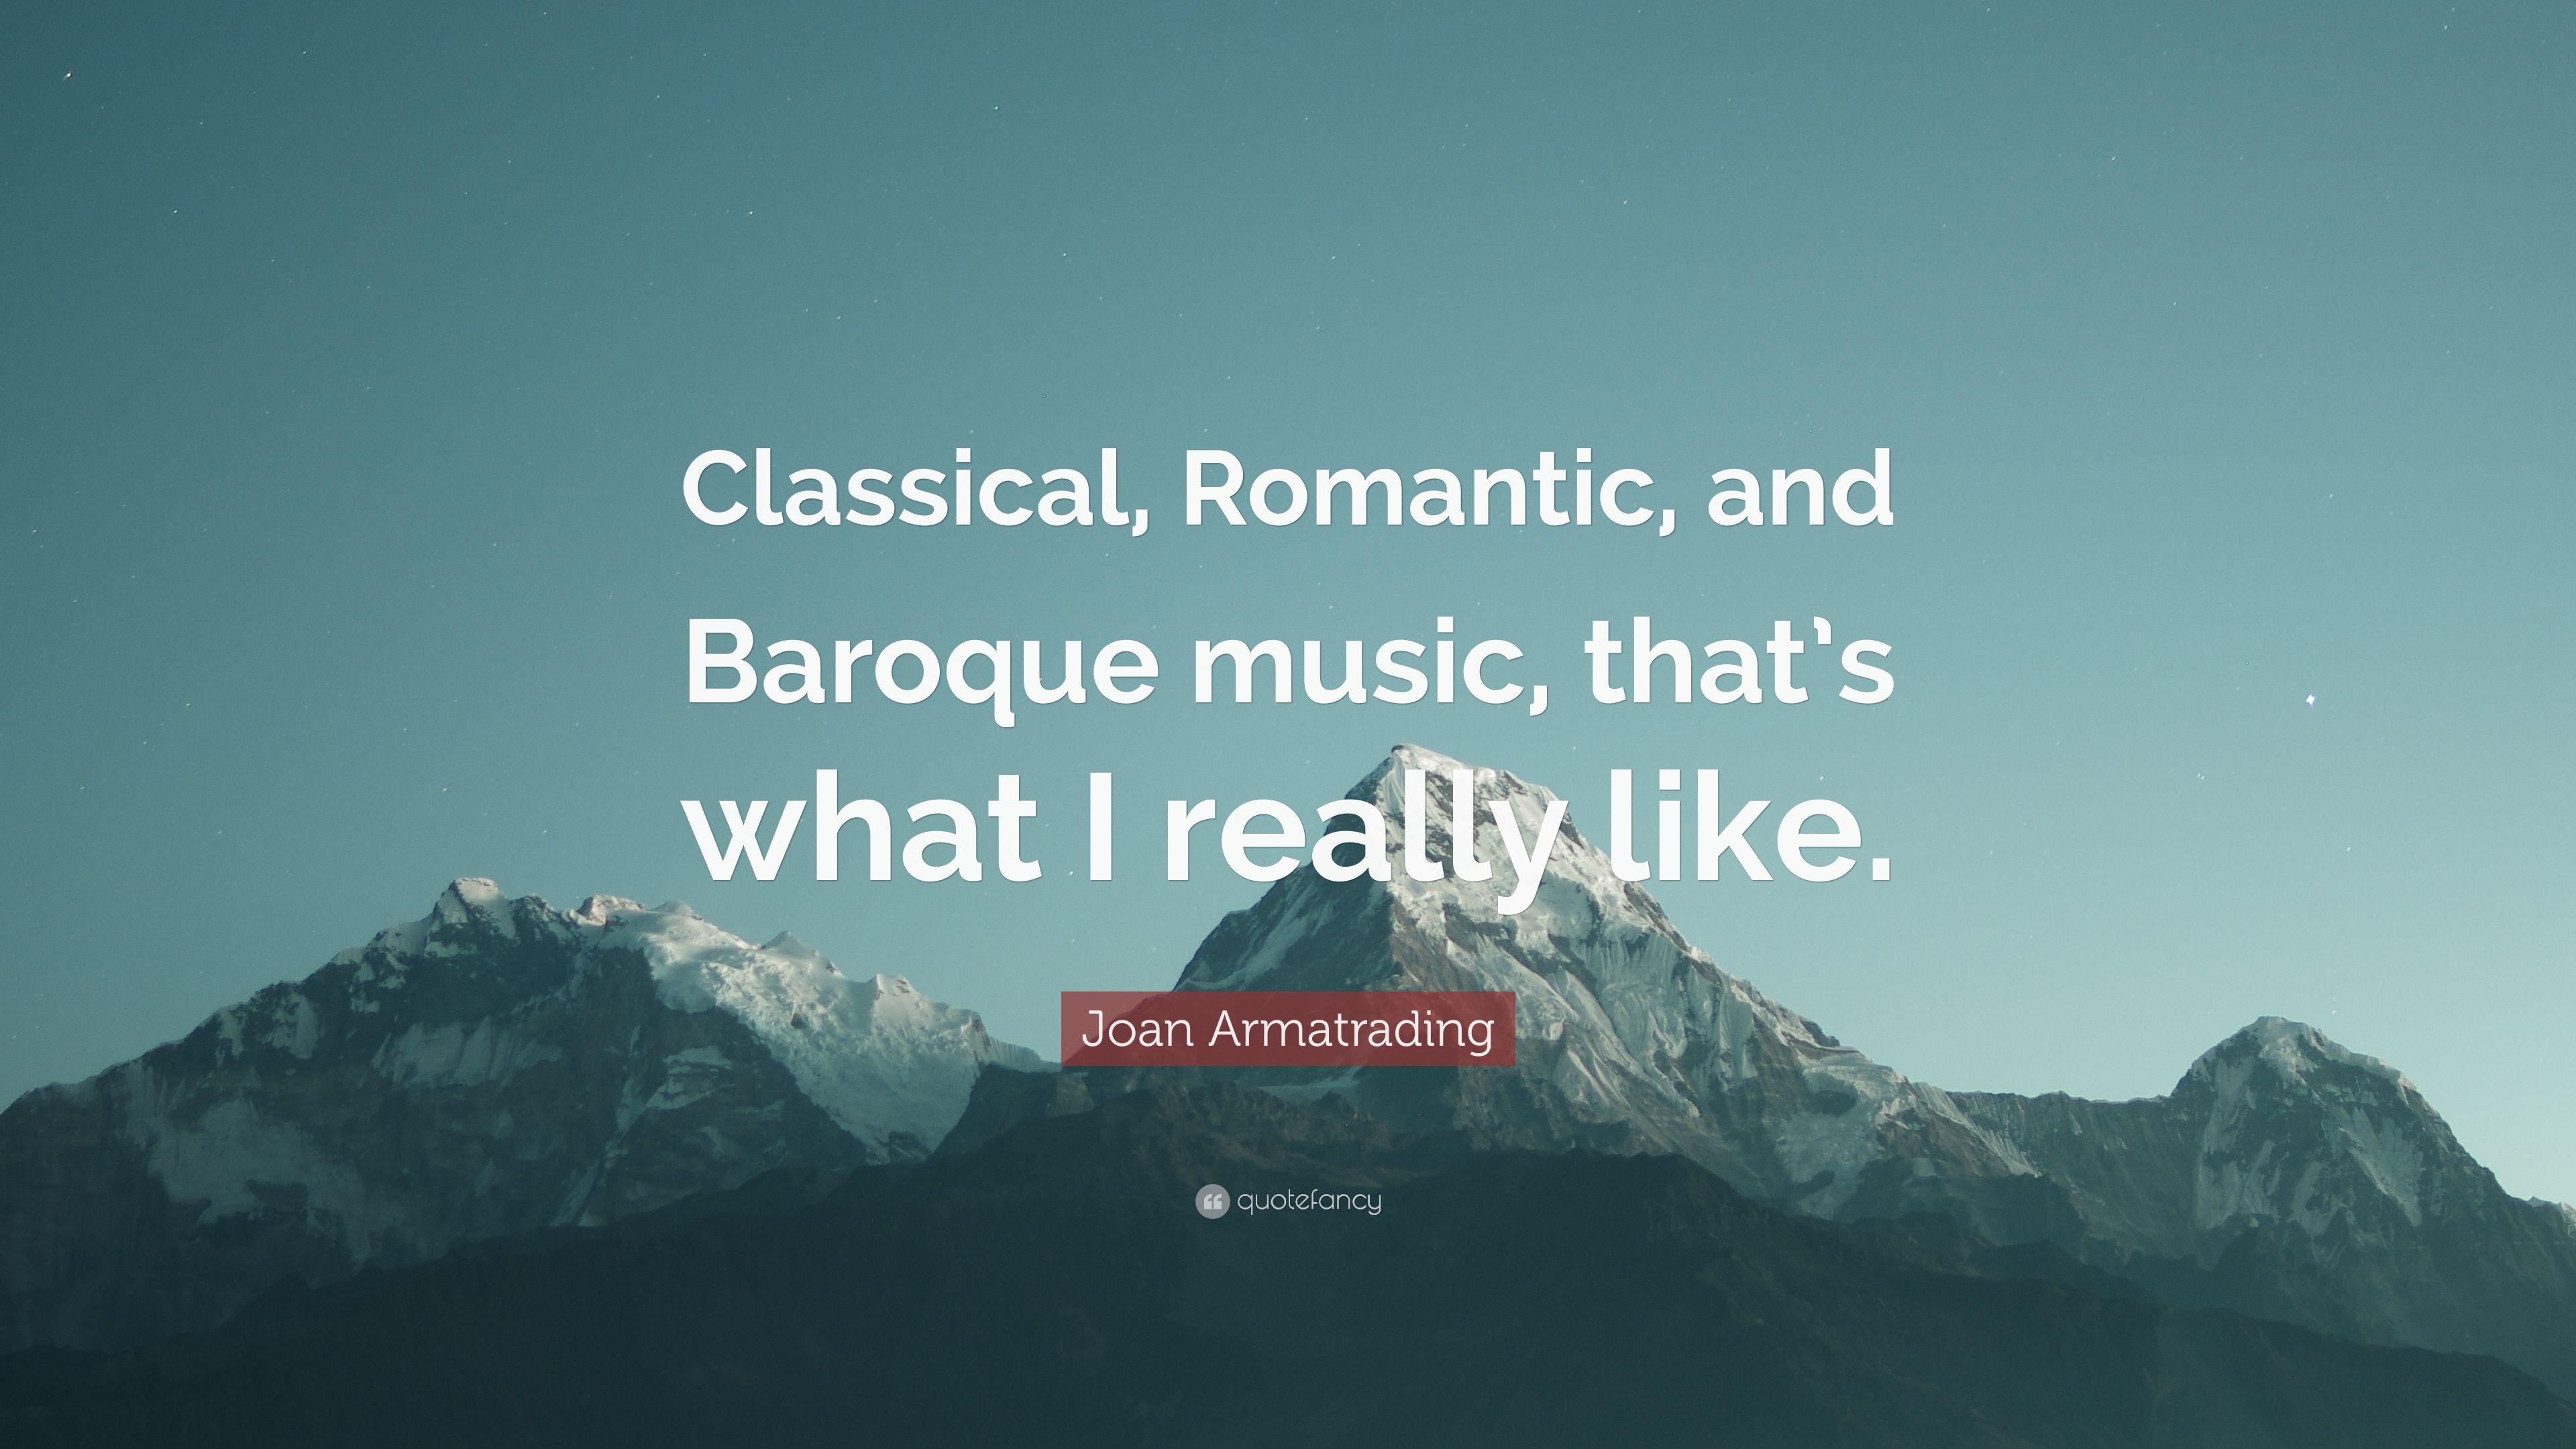 Joan Armatrading Quote: “Classical, Romantic, and Baroque music